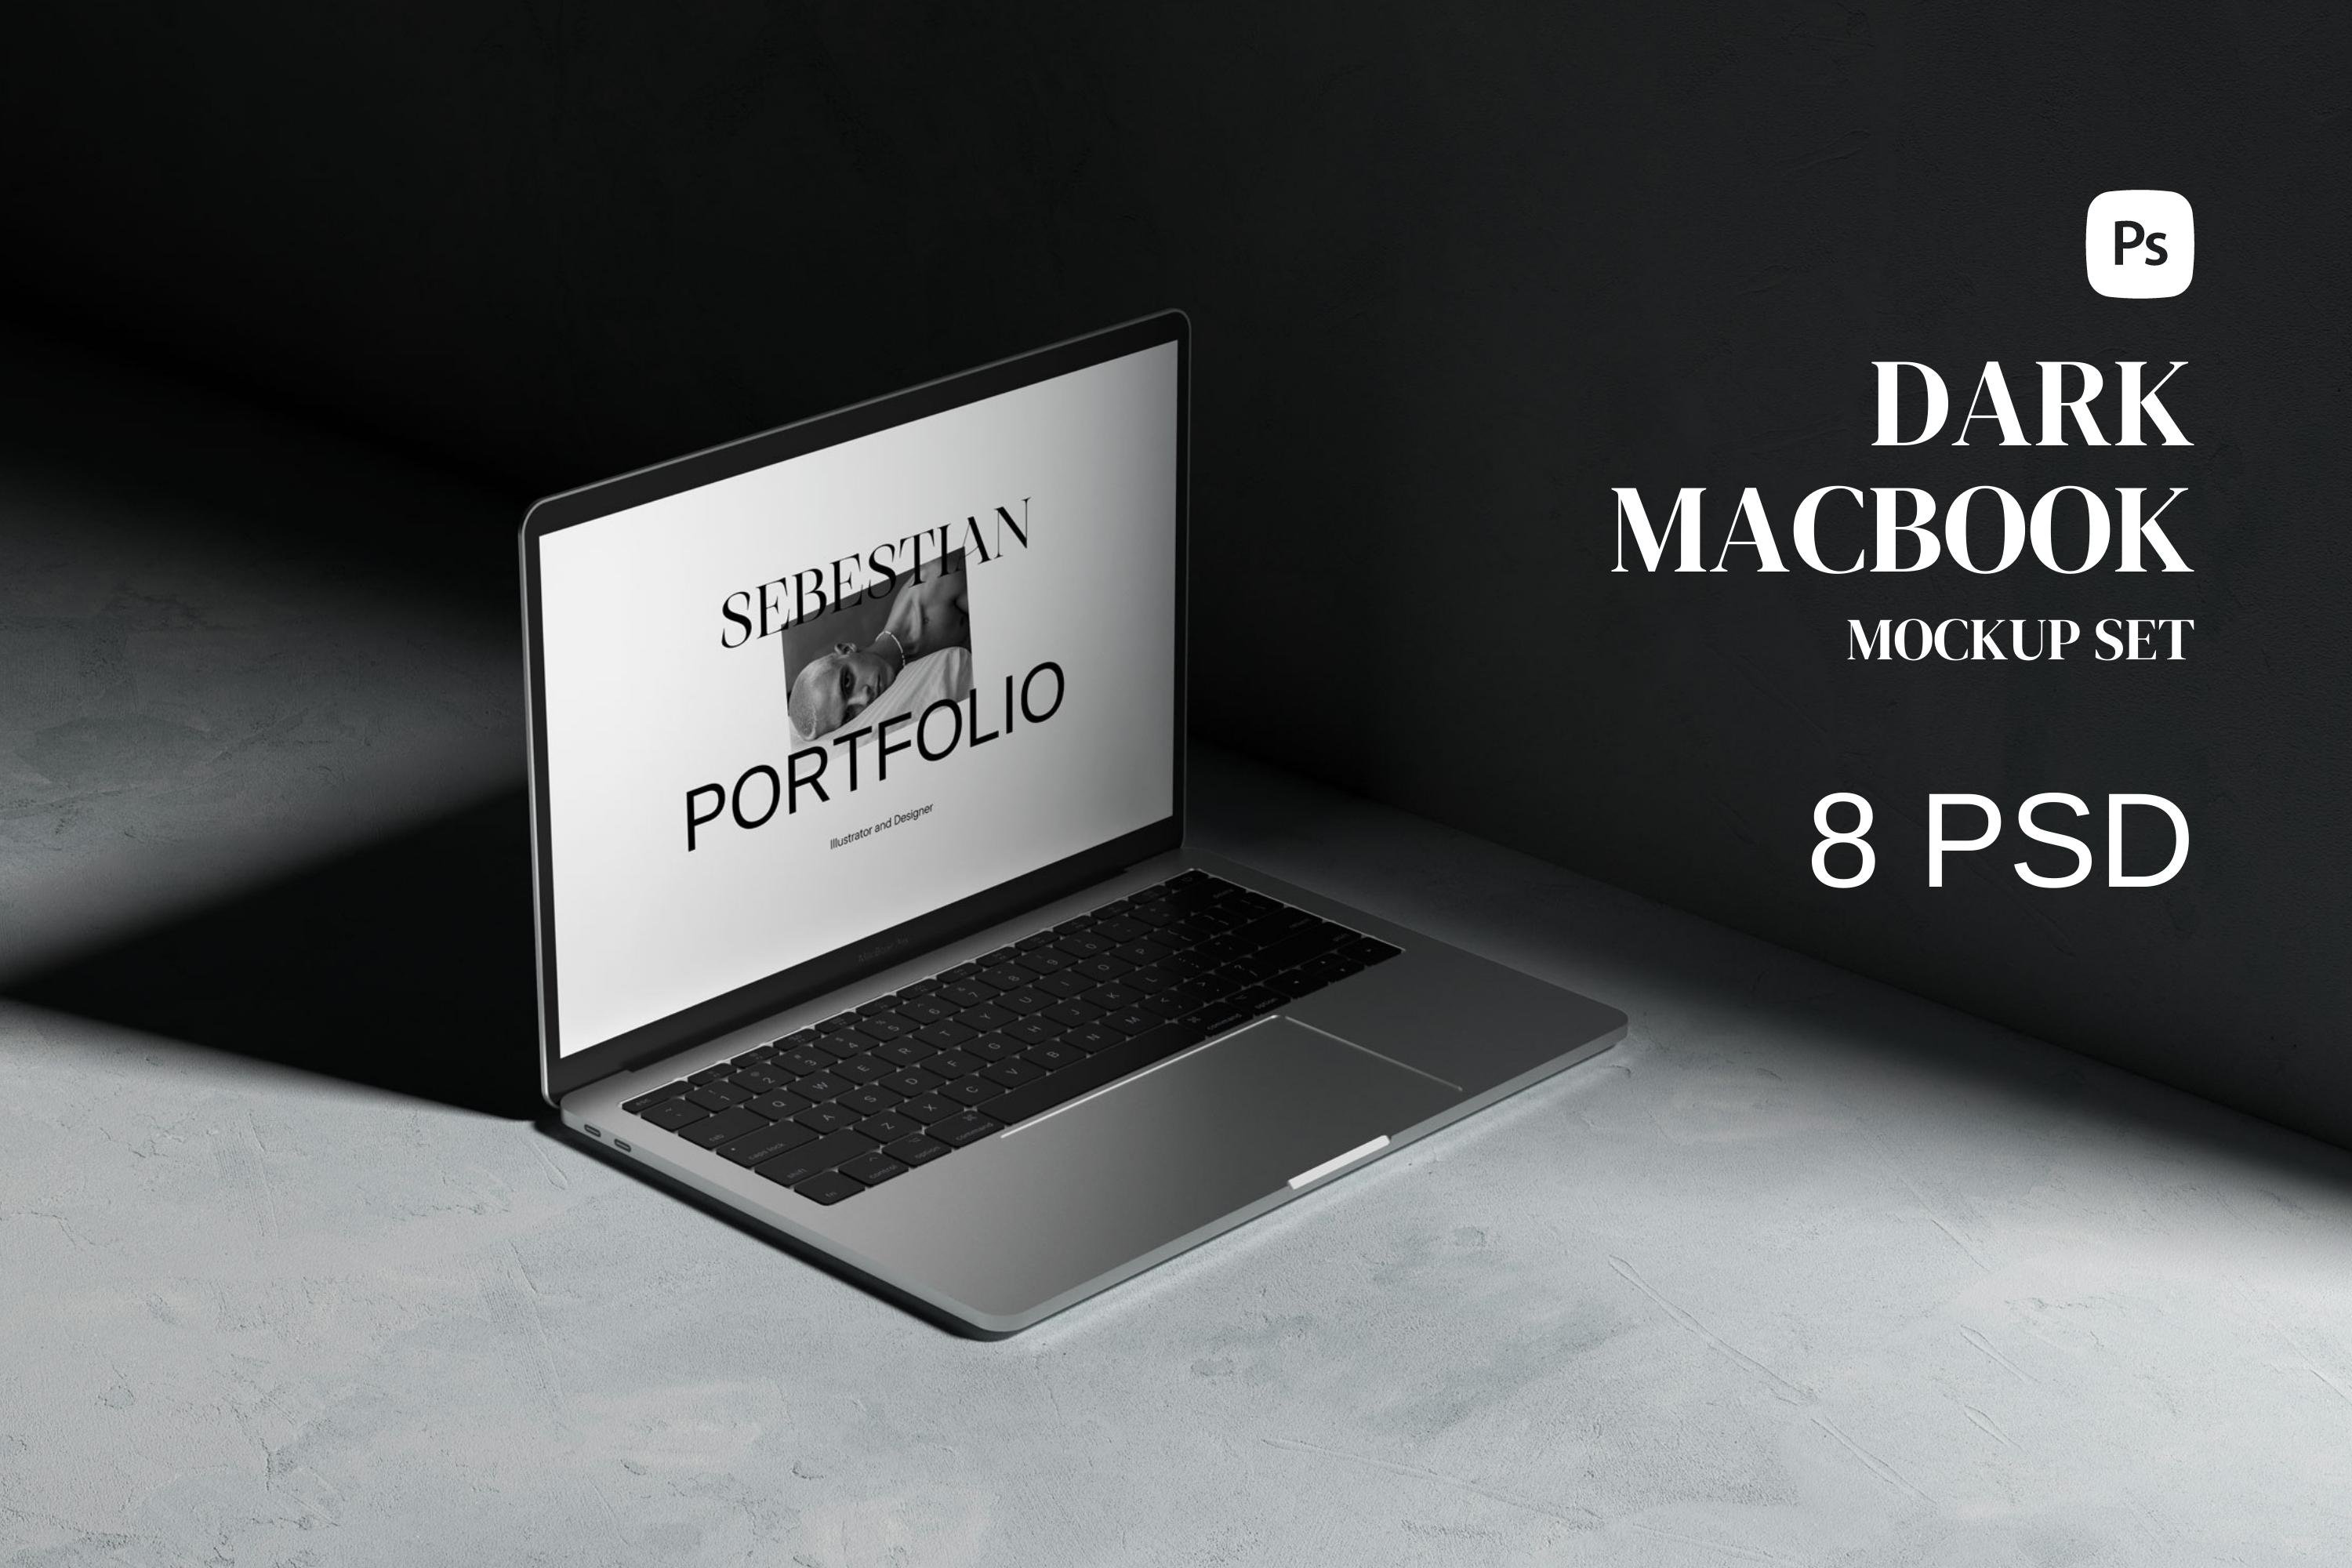 Dark MacBook Mockup Bundle cover image.